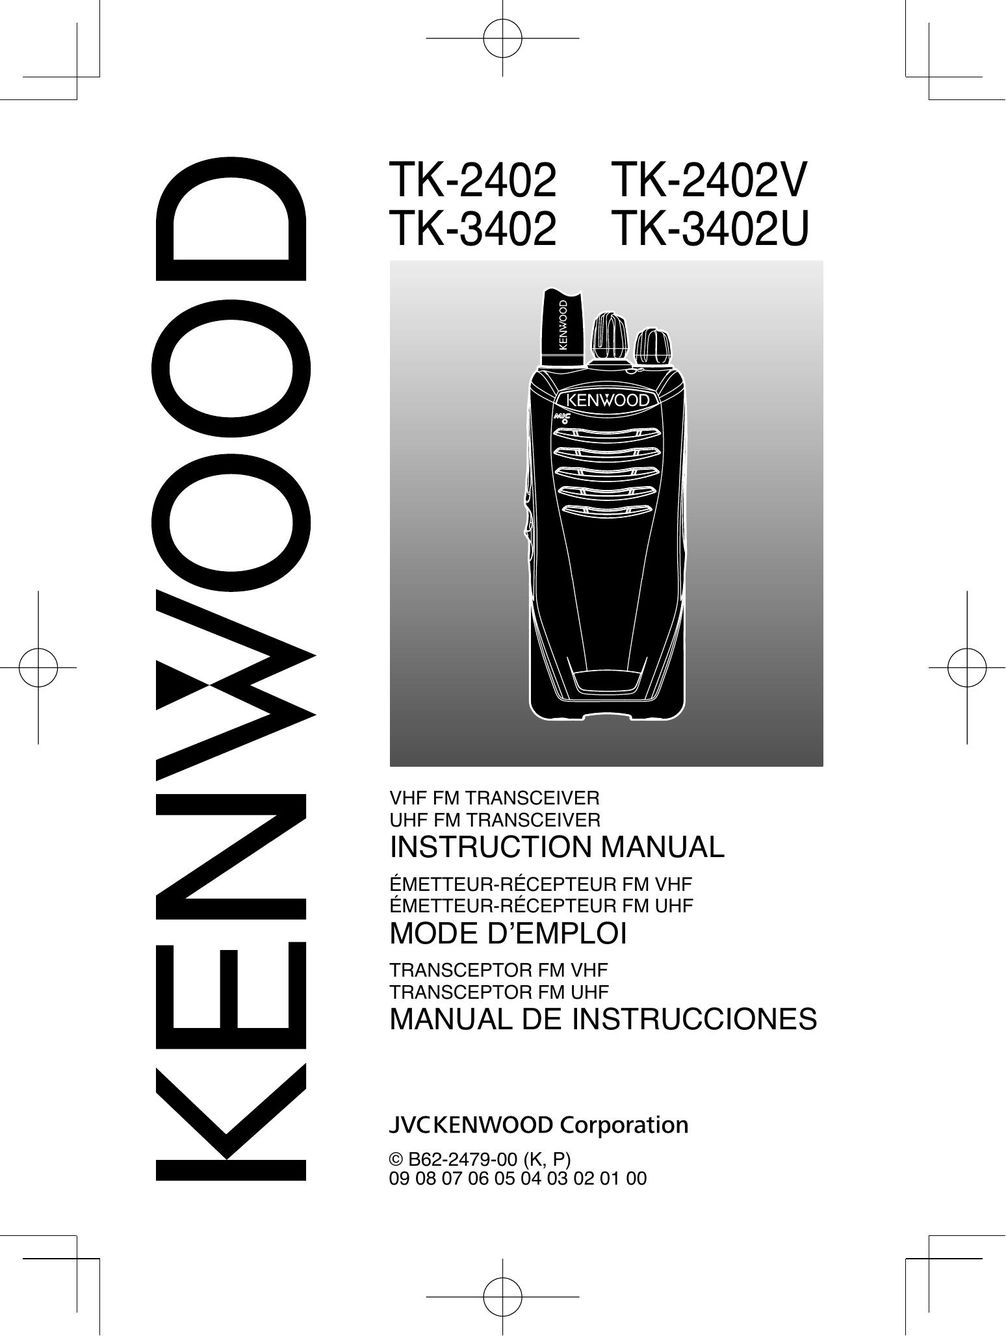 Kenwood TK-2402V Satellite Radio User Manual